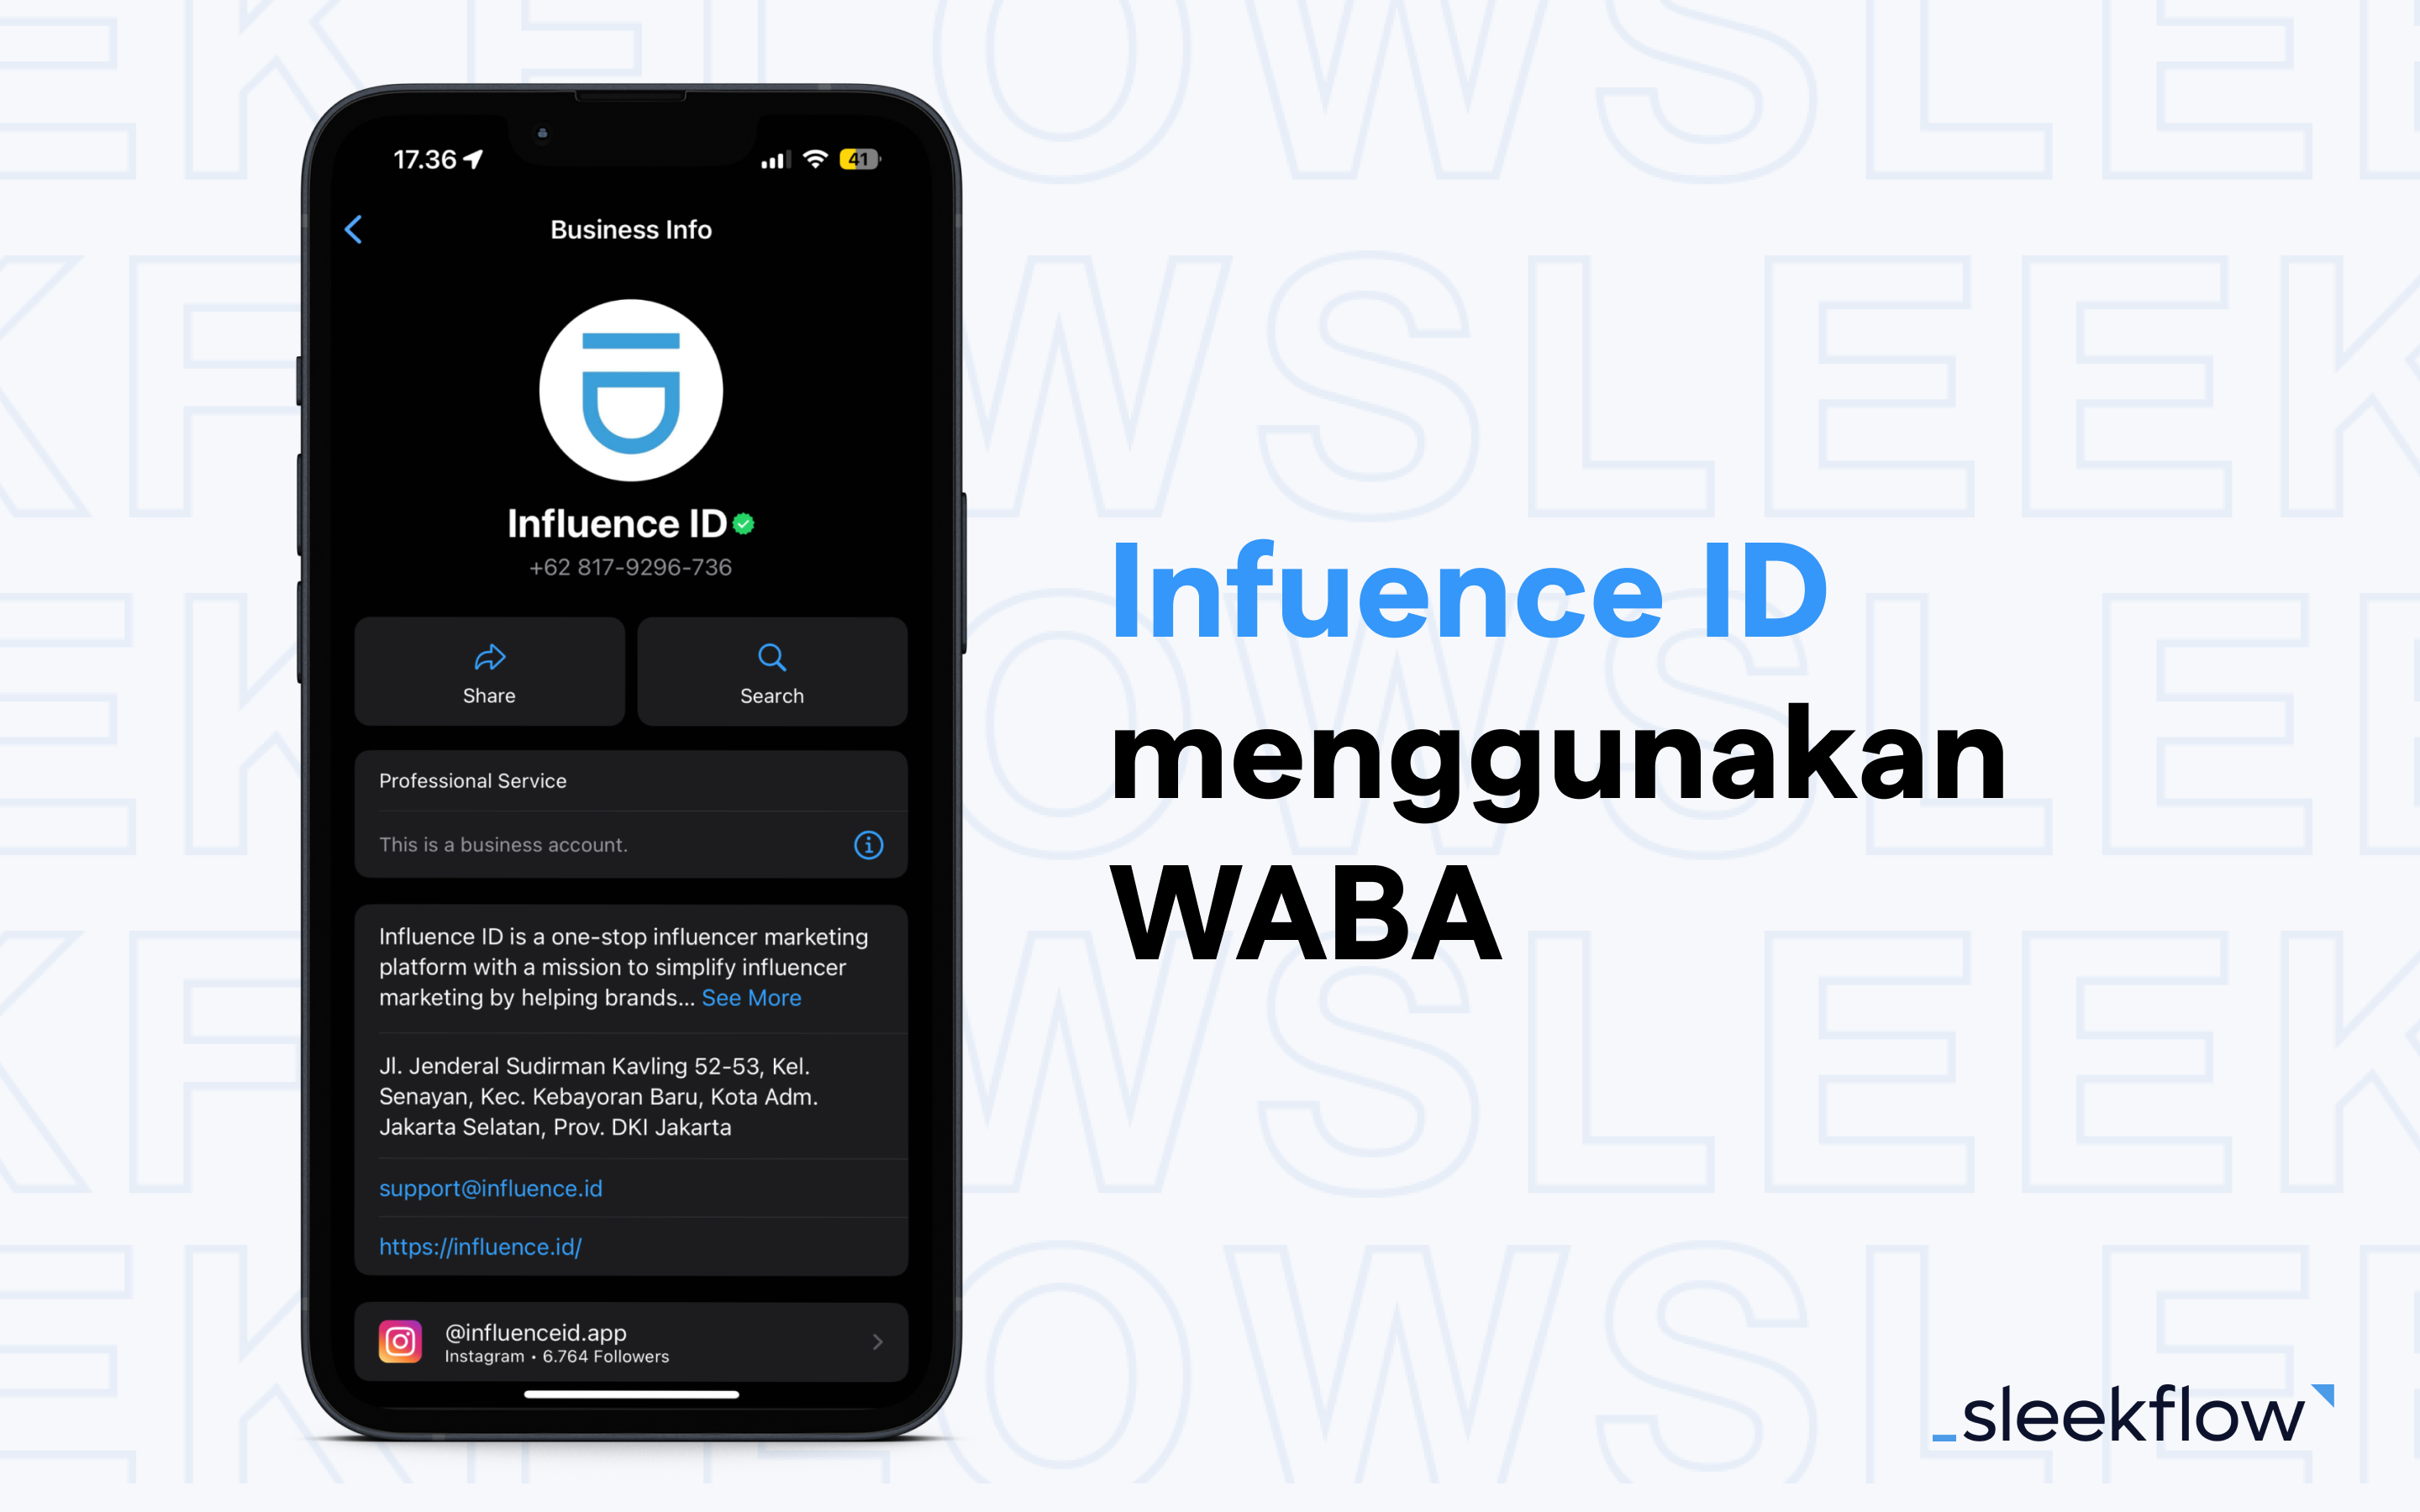 Influence ID menggunakan WABA